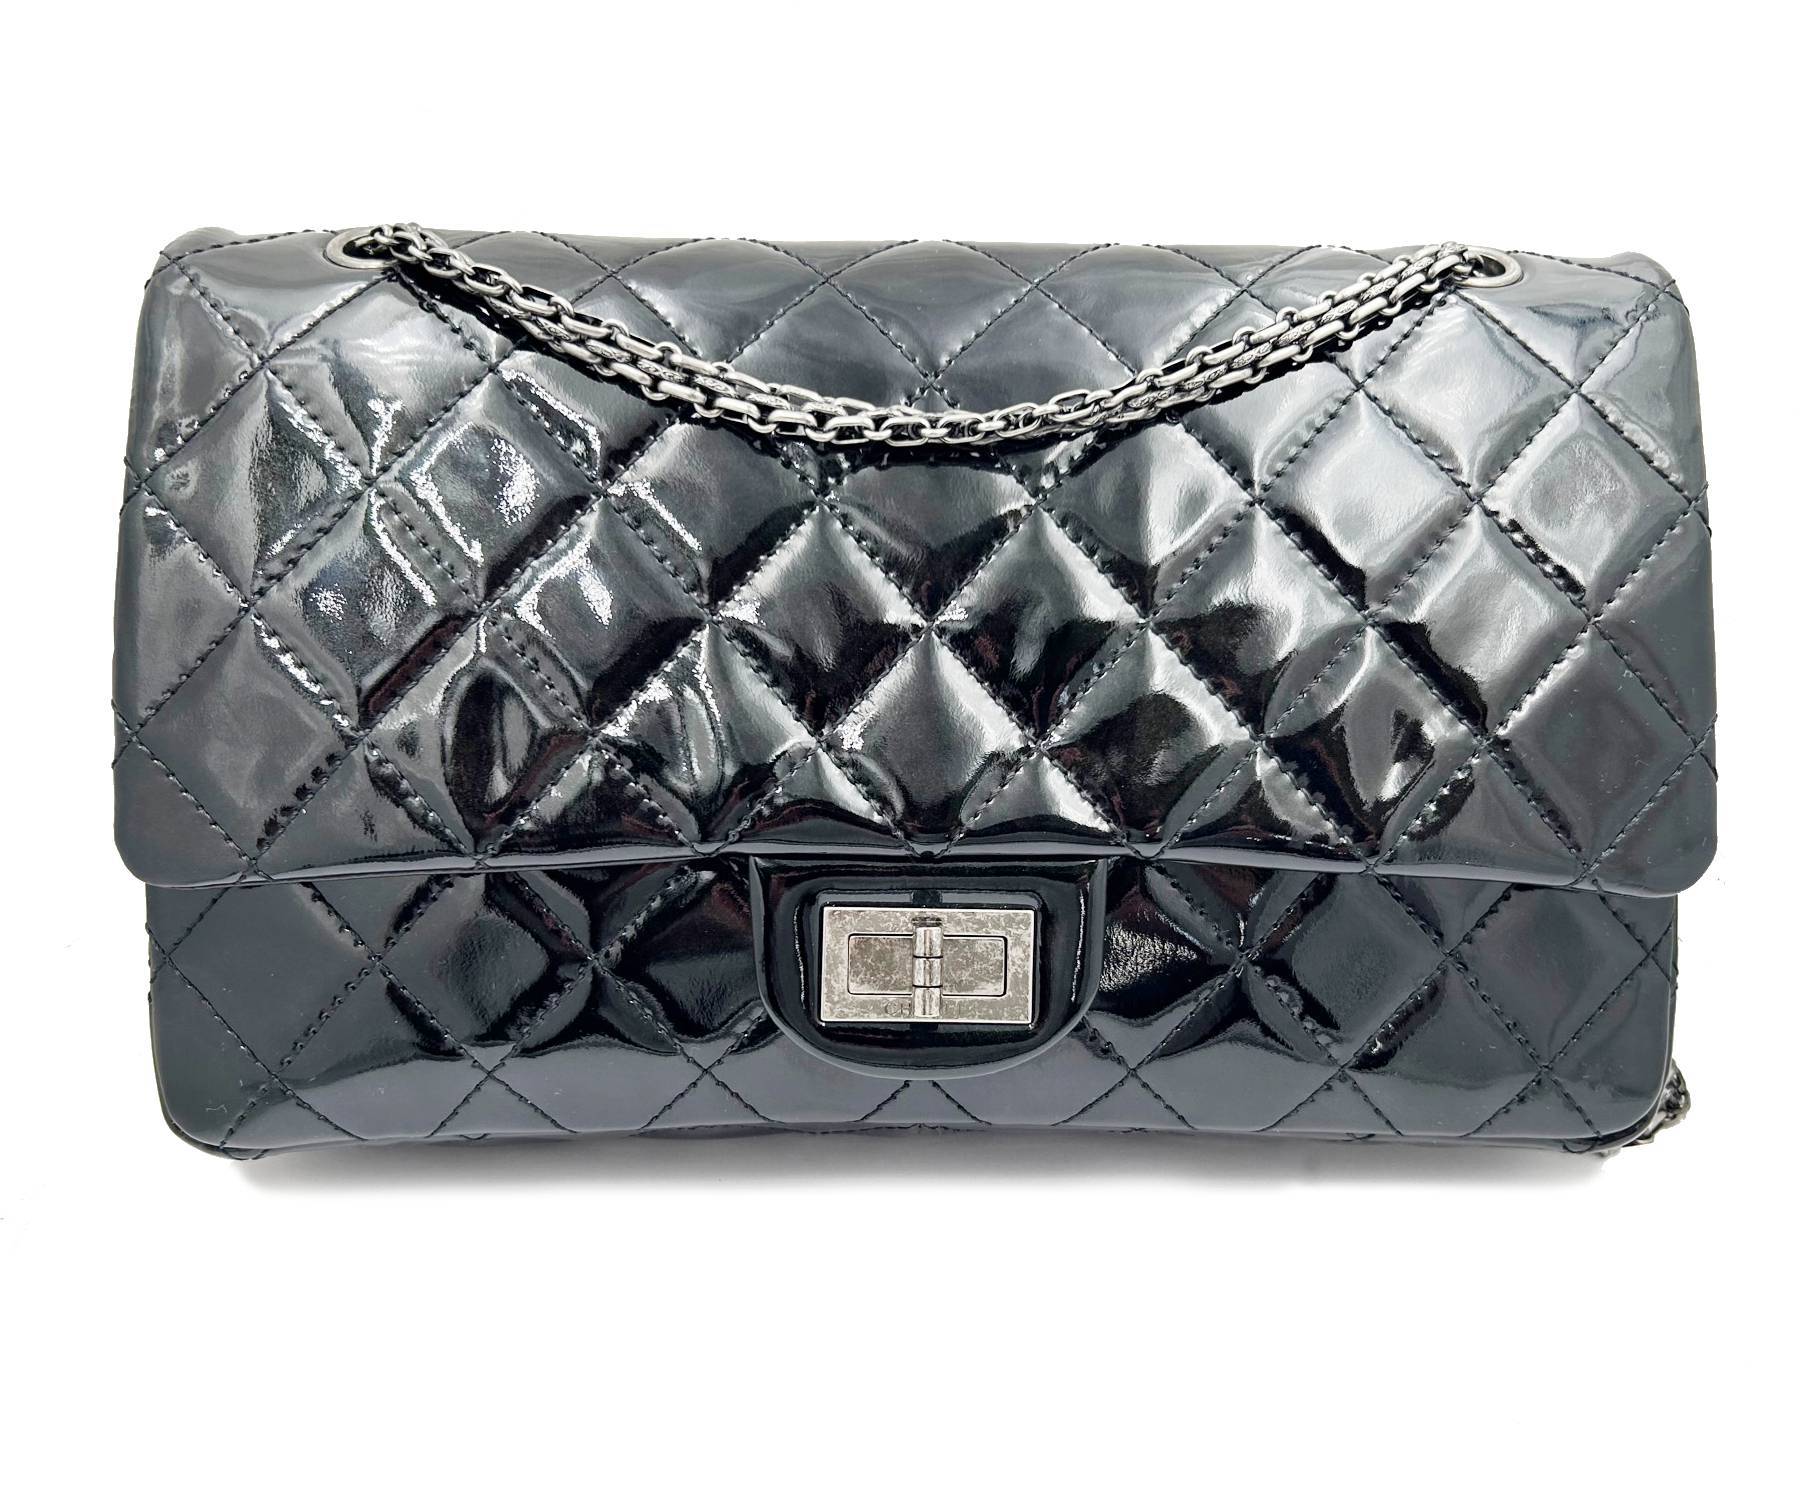 Chanel Black Patent Leather Ruthenium Hardware 2.55 Jumbo Shoulder Bag